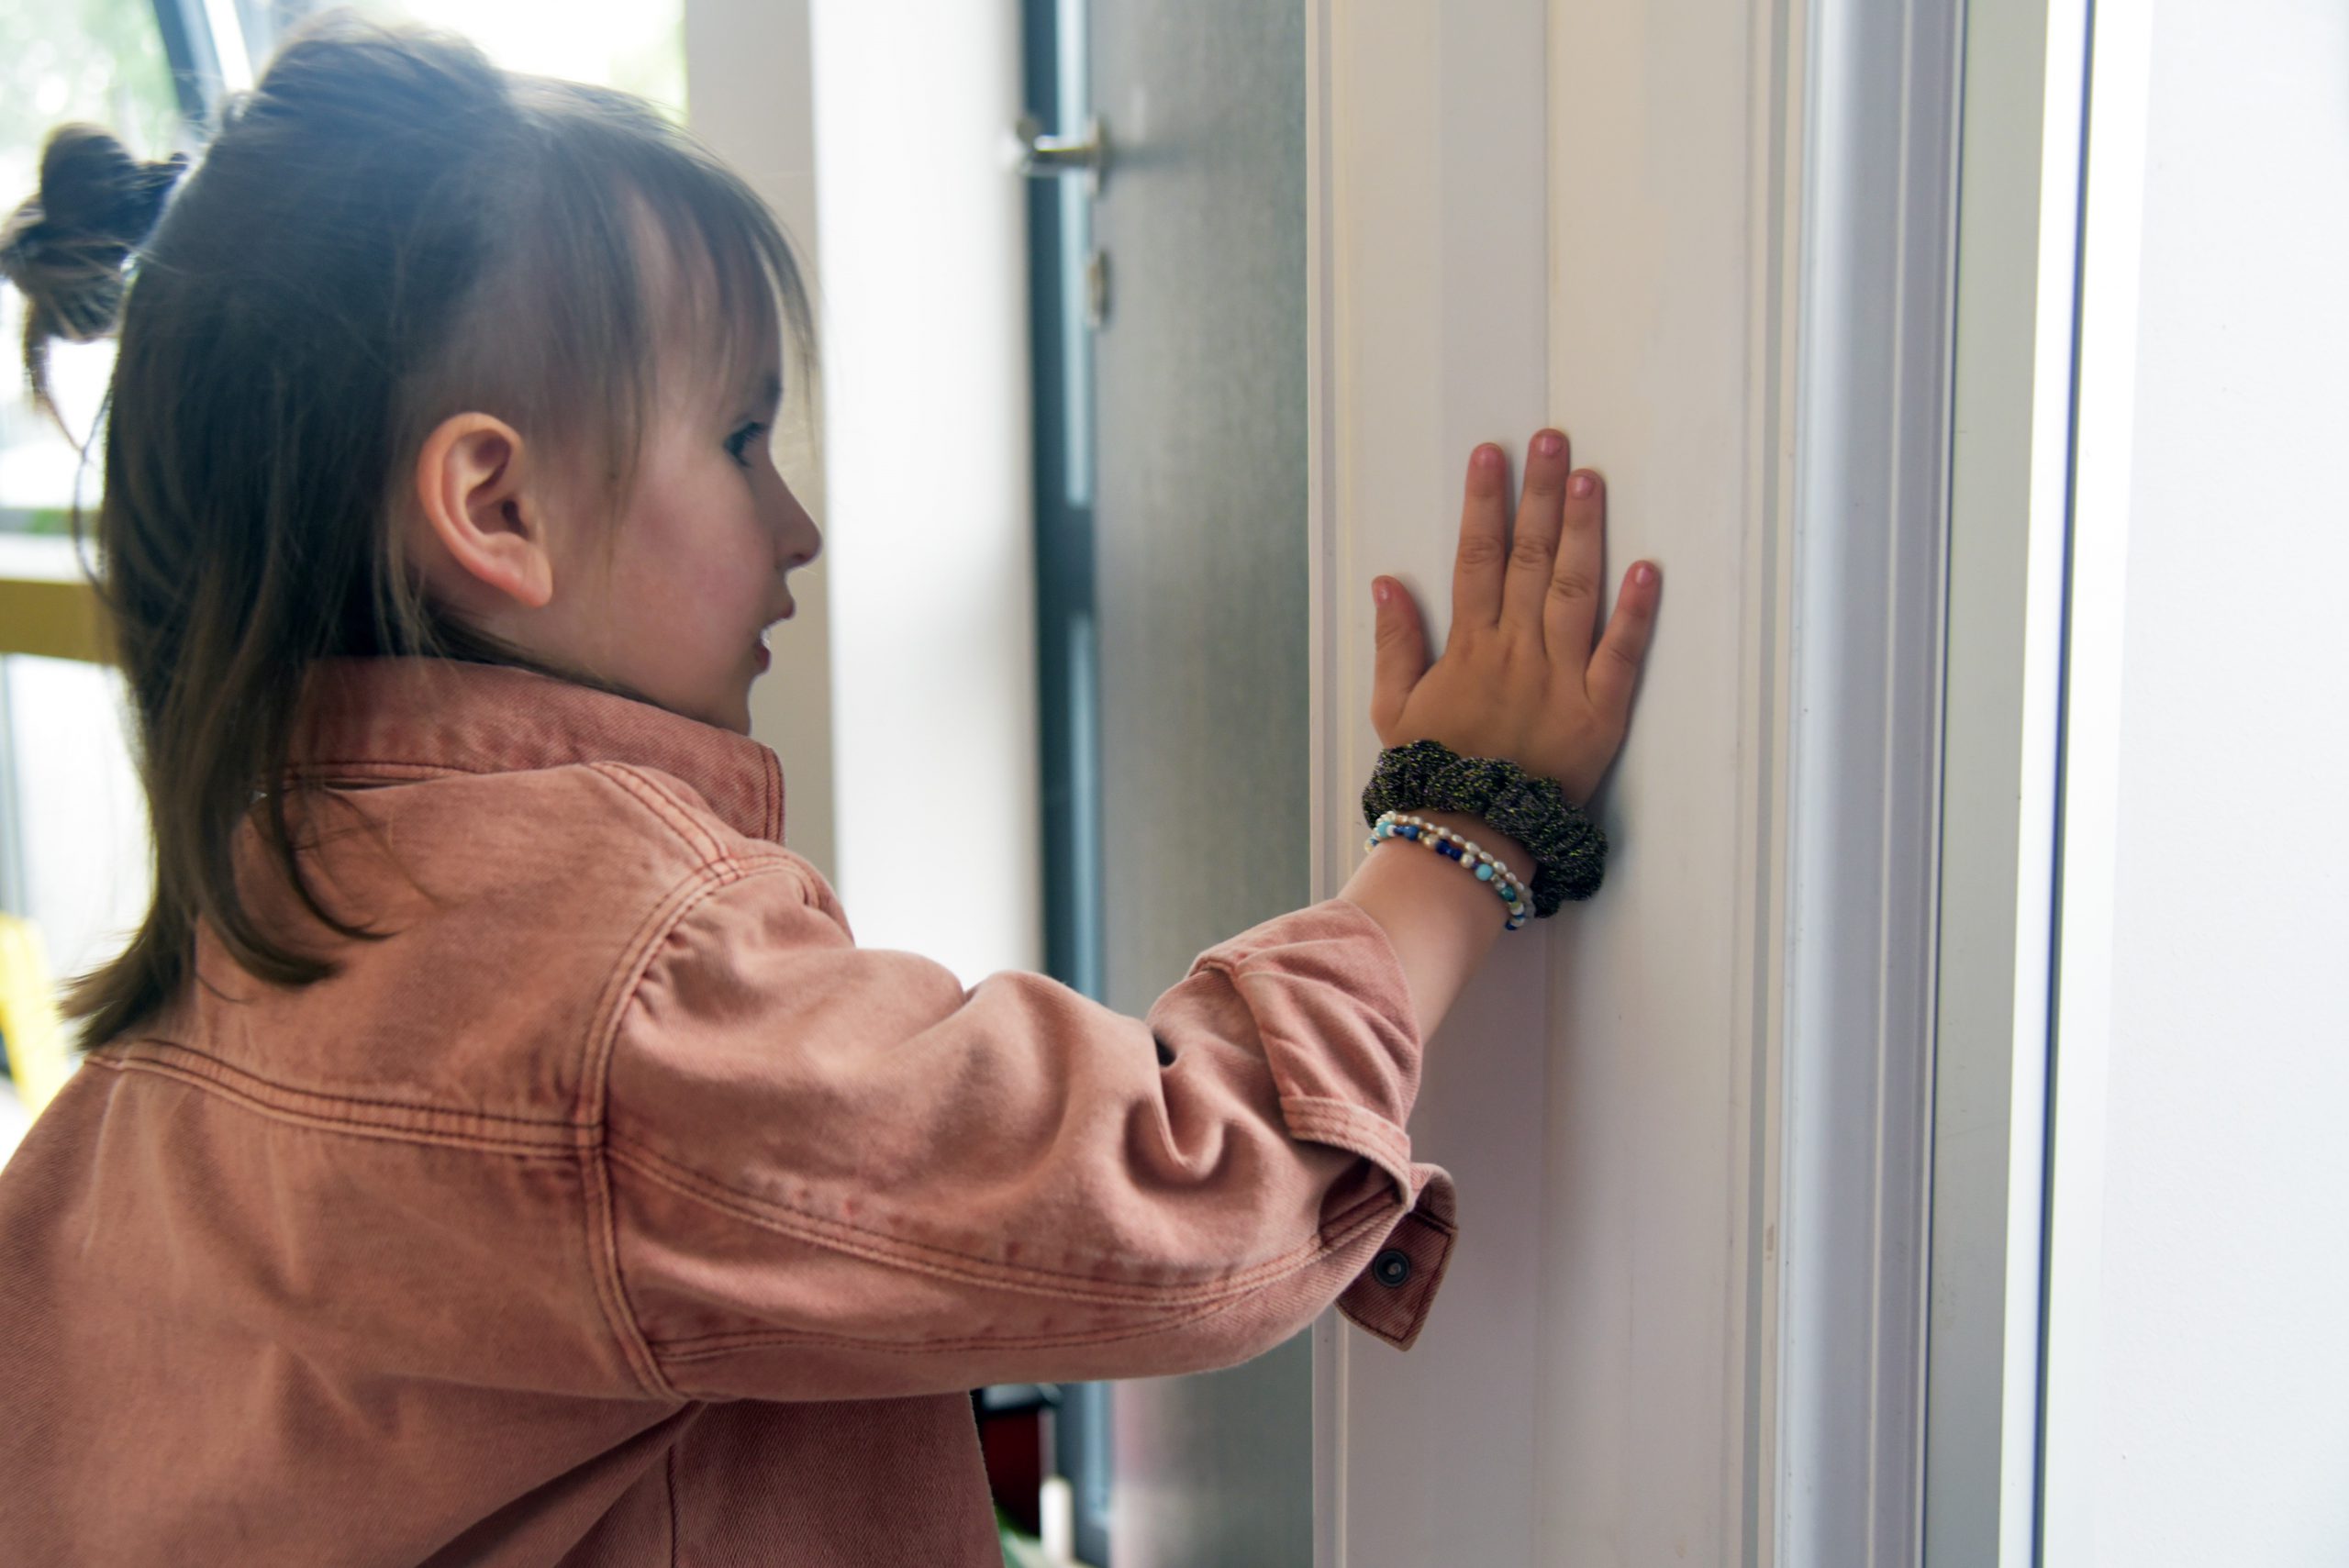 Choosing the Best Finger Pinch Guard for Child Safety: Finger Alert or Rollo?